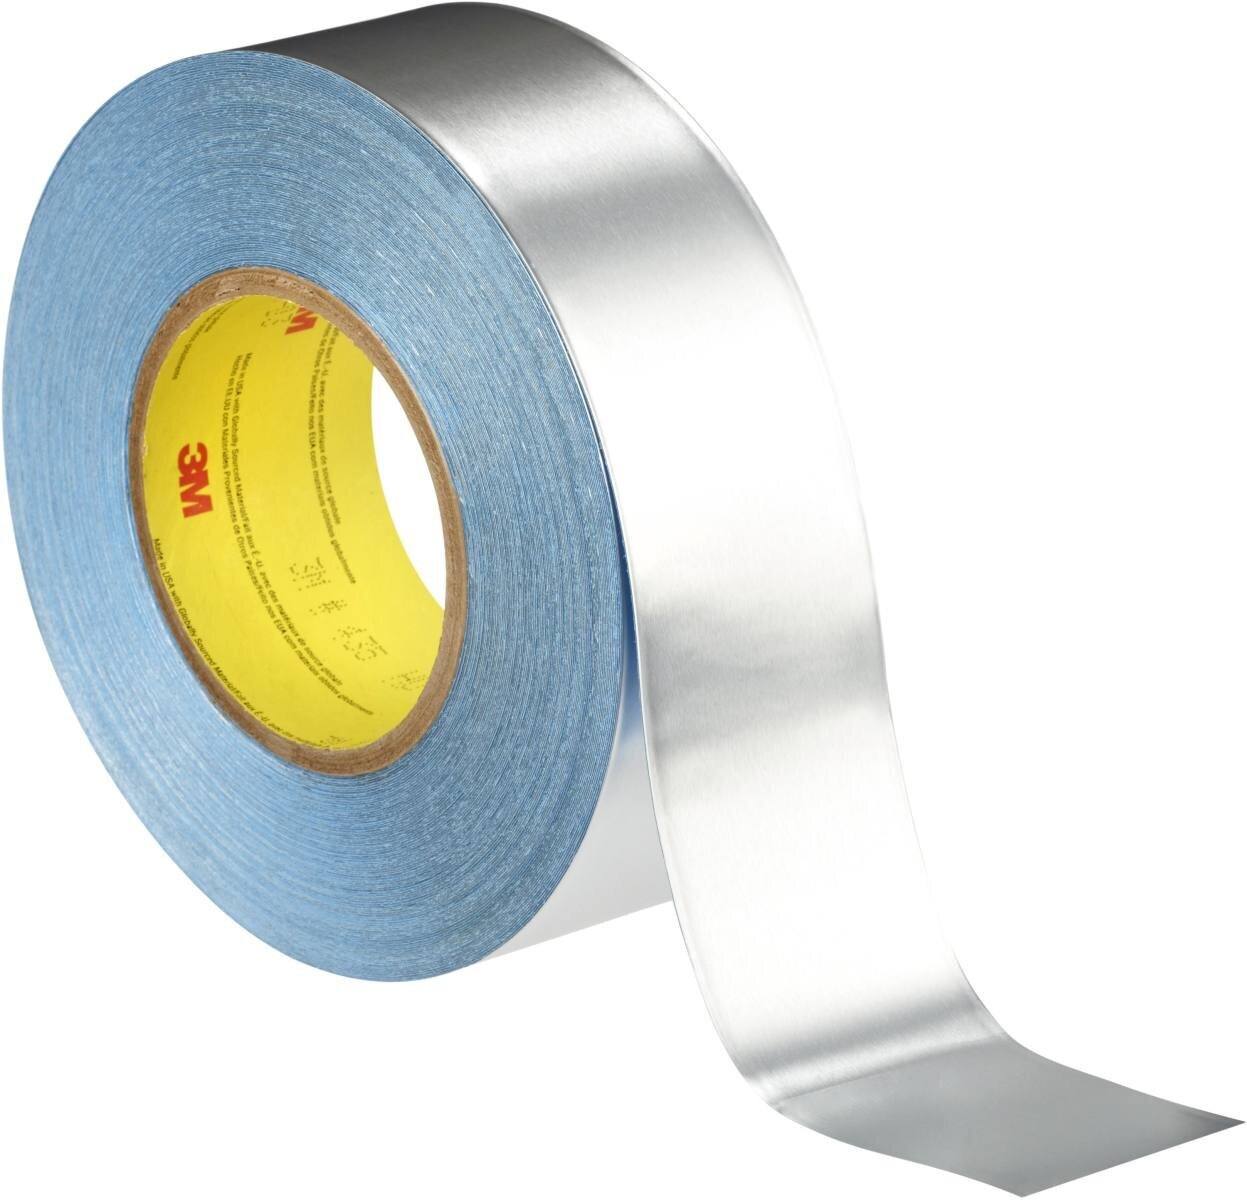 3M metal adhesive tape 436, silver, 50.8 mm x 33 m, 0.43 mm